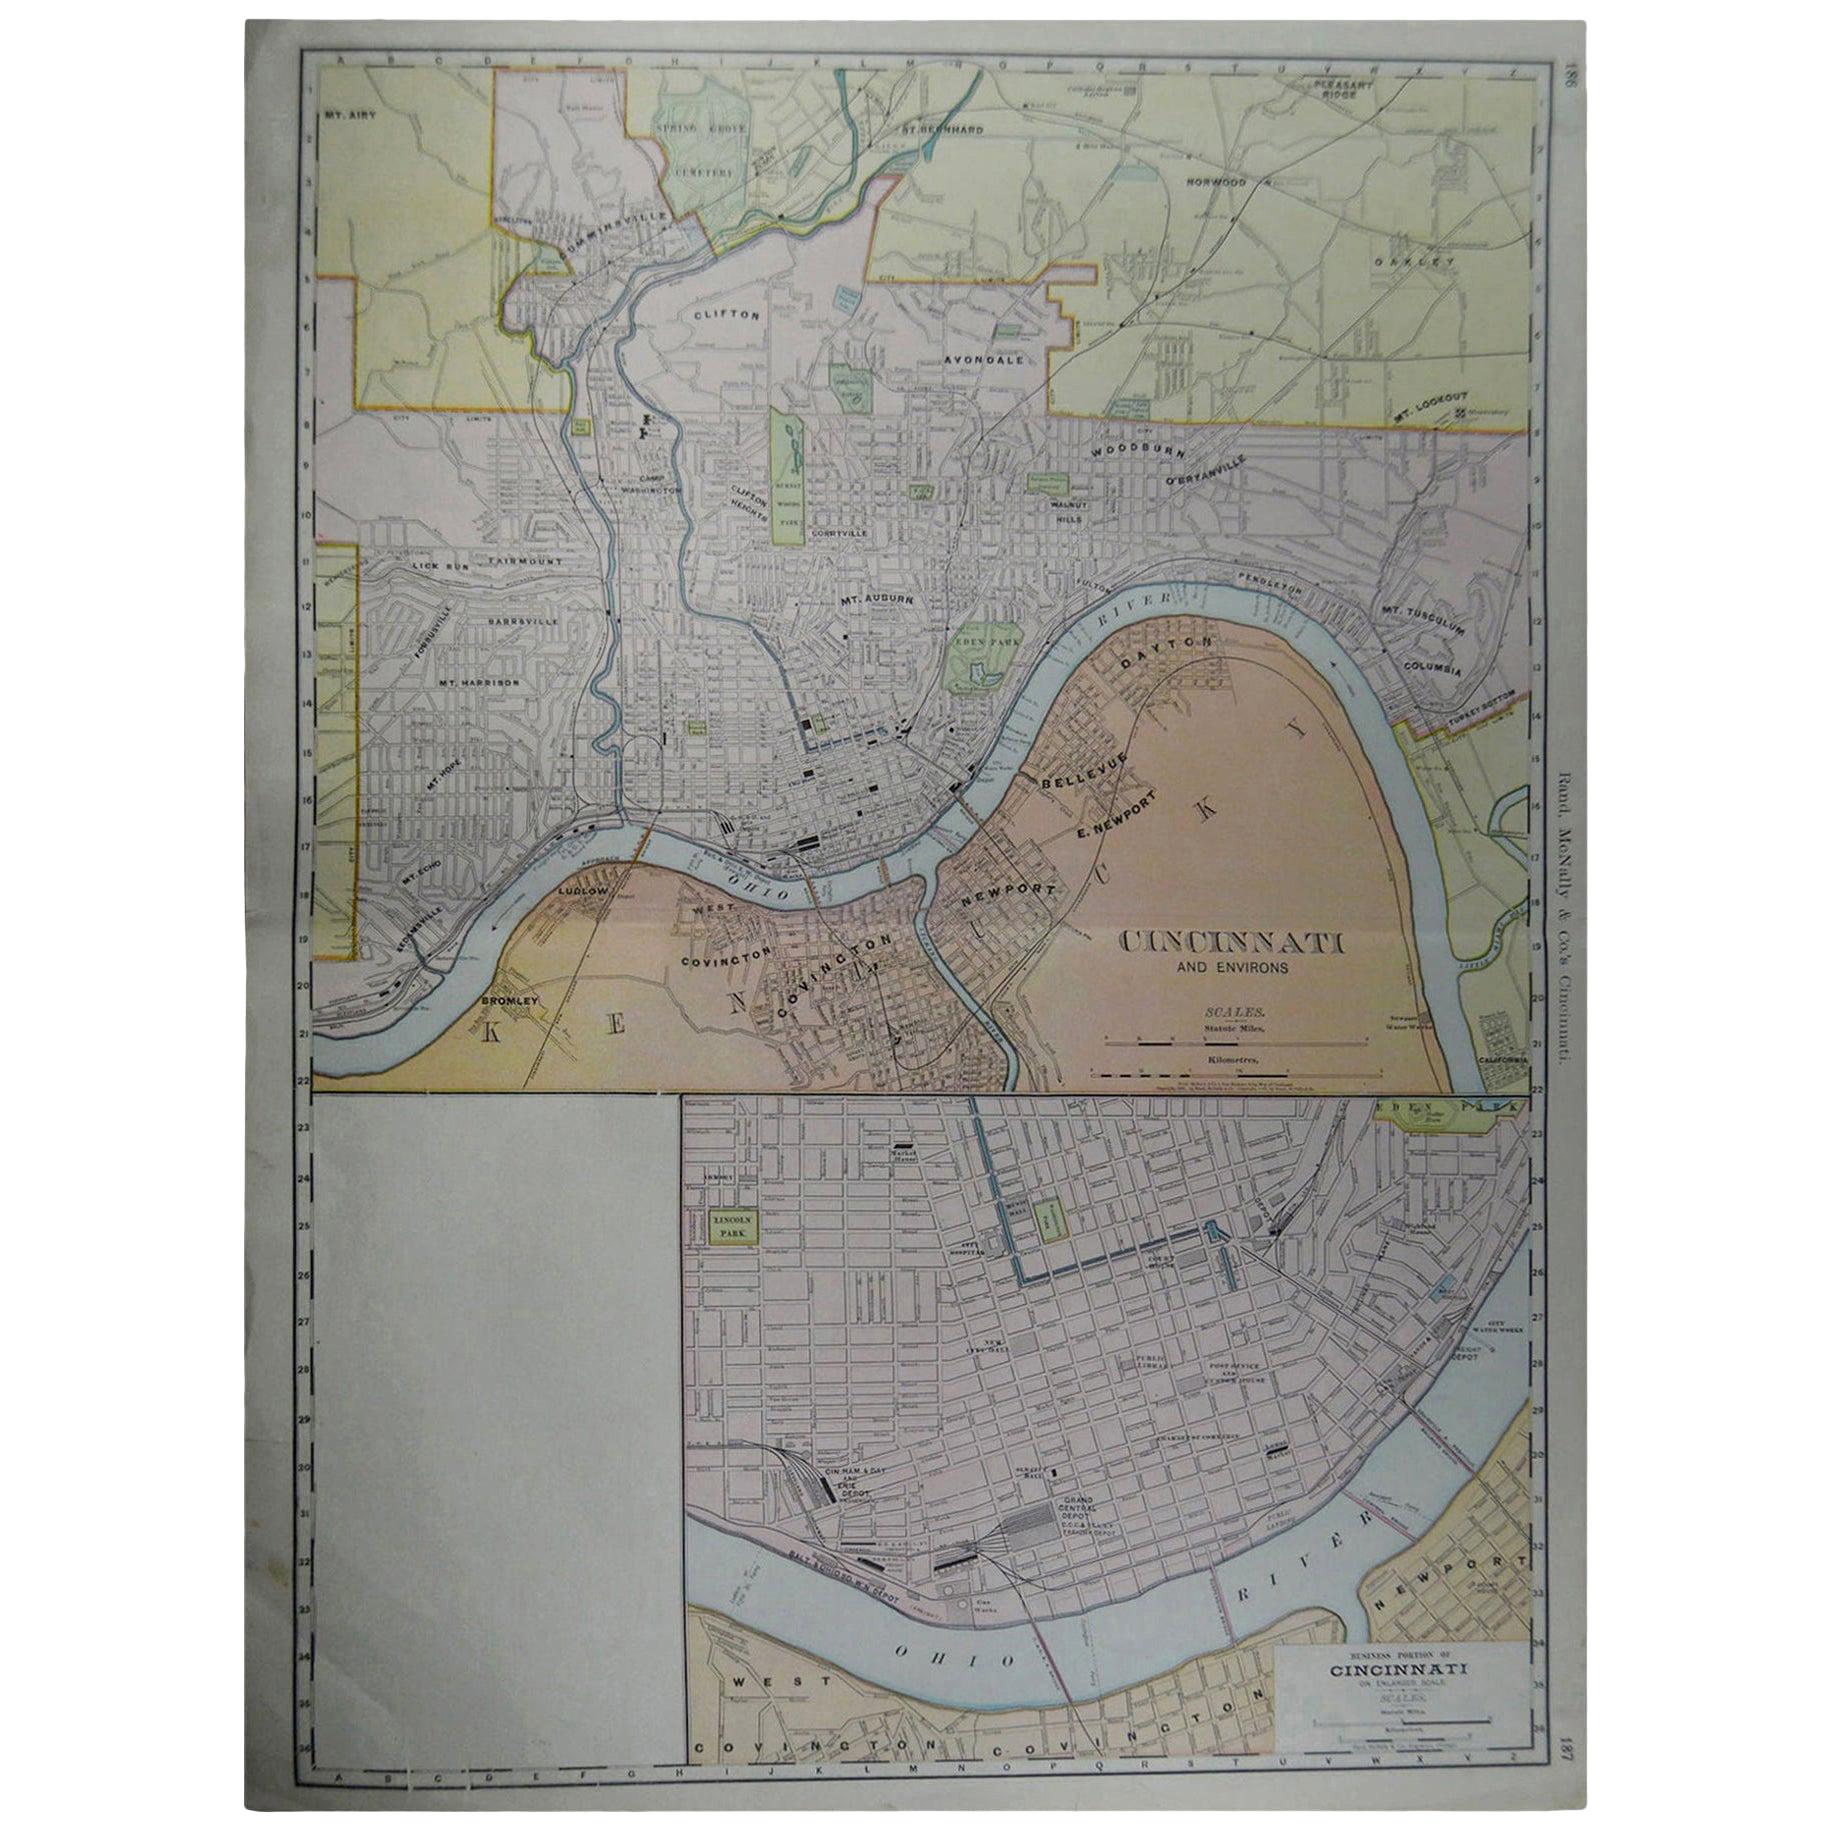 Großes originales antikes Stadtplan von Cincinnati, USA, um 1900